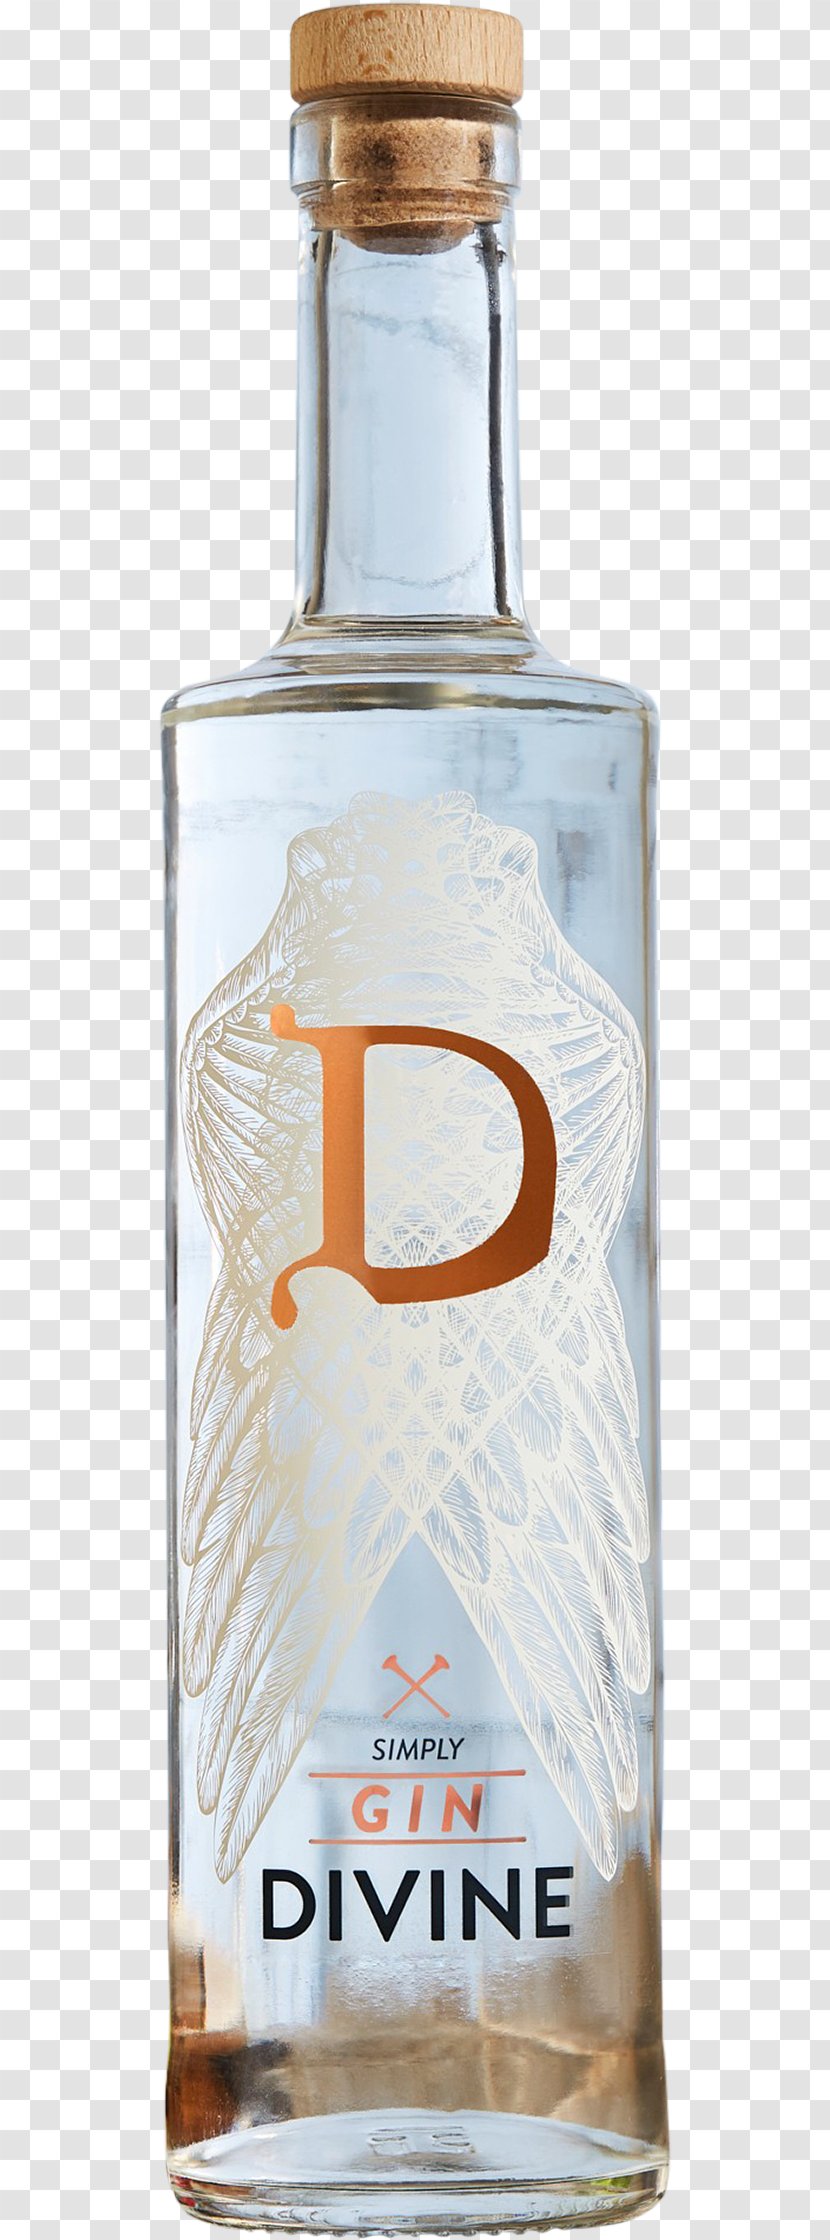 Gin Distilled Beverage Vodka Tonic Water Rectified Spirit Transparent PNG